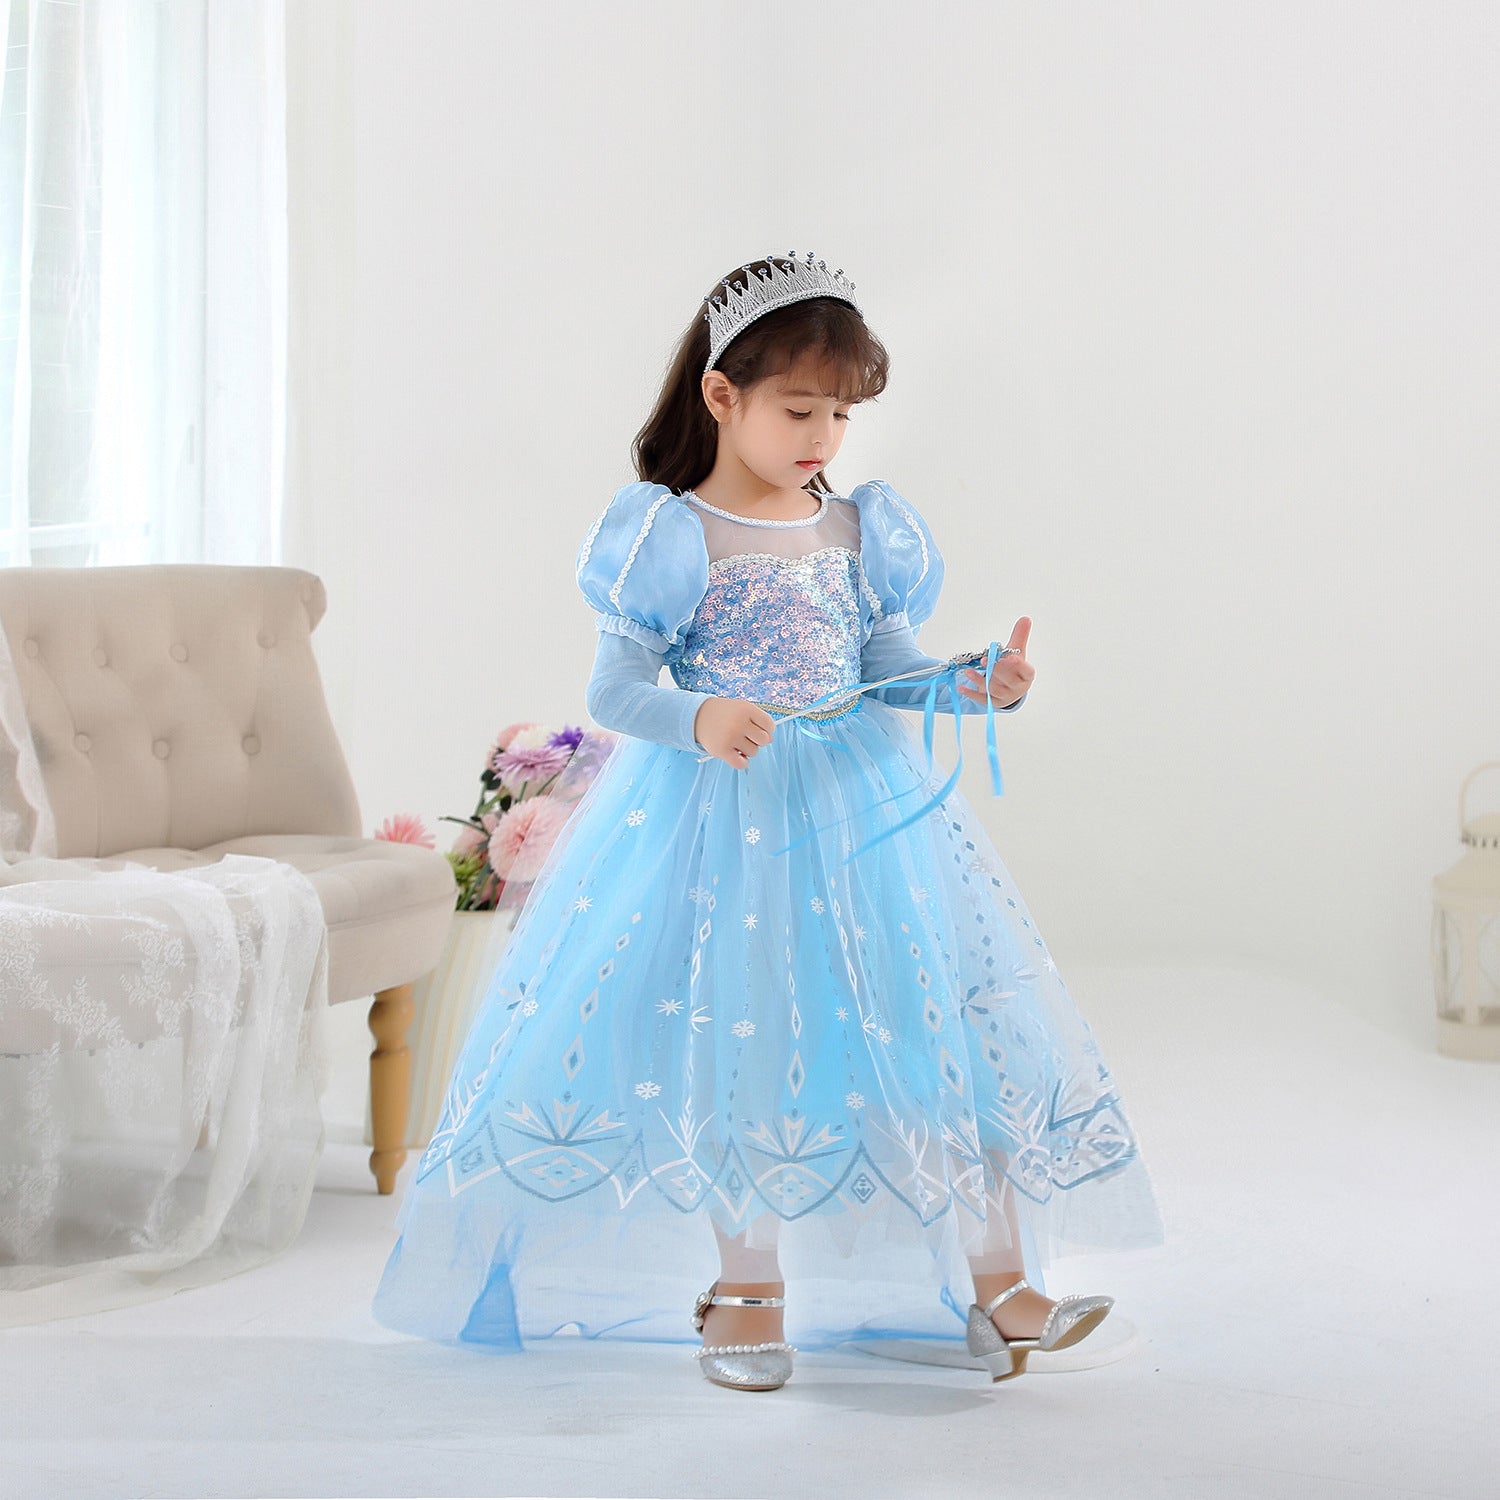 New Frozen 2 Elsa Dresses Princess Girl Costume Dresses Halloween Christmas Party Holiday